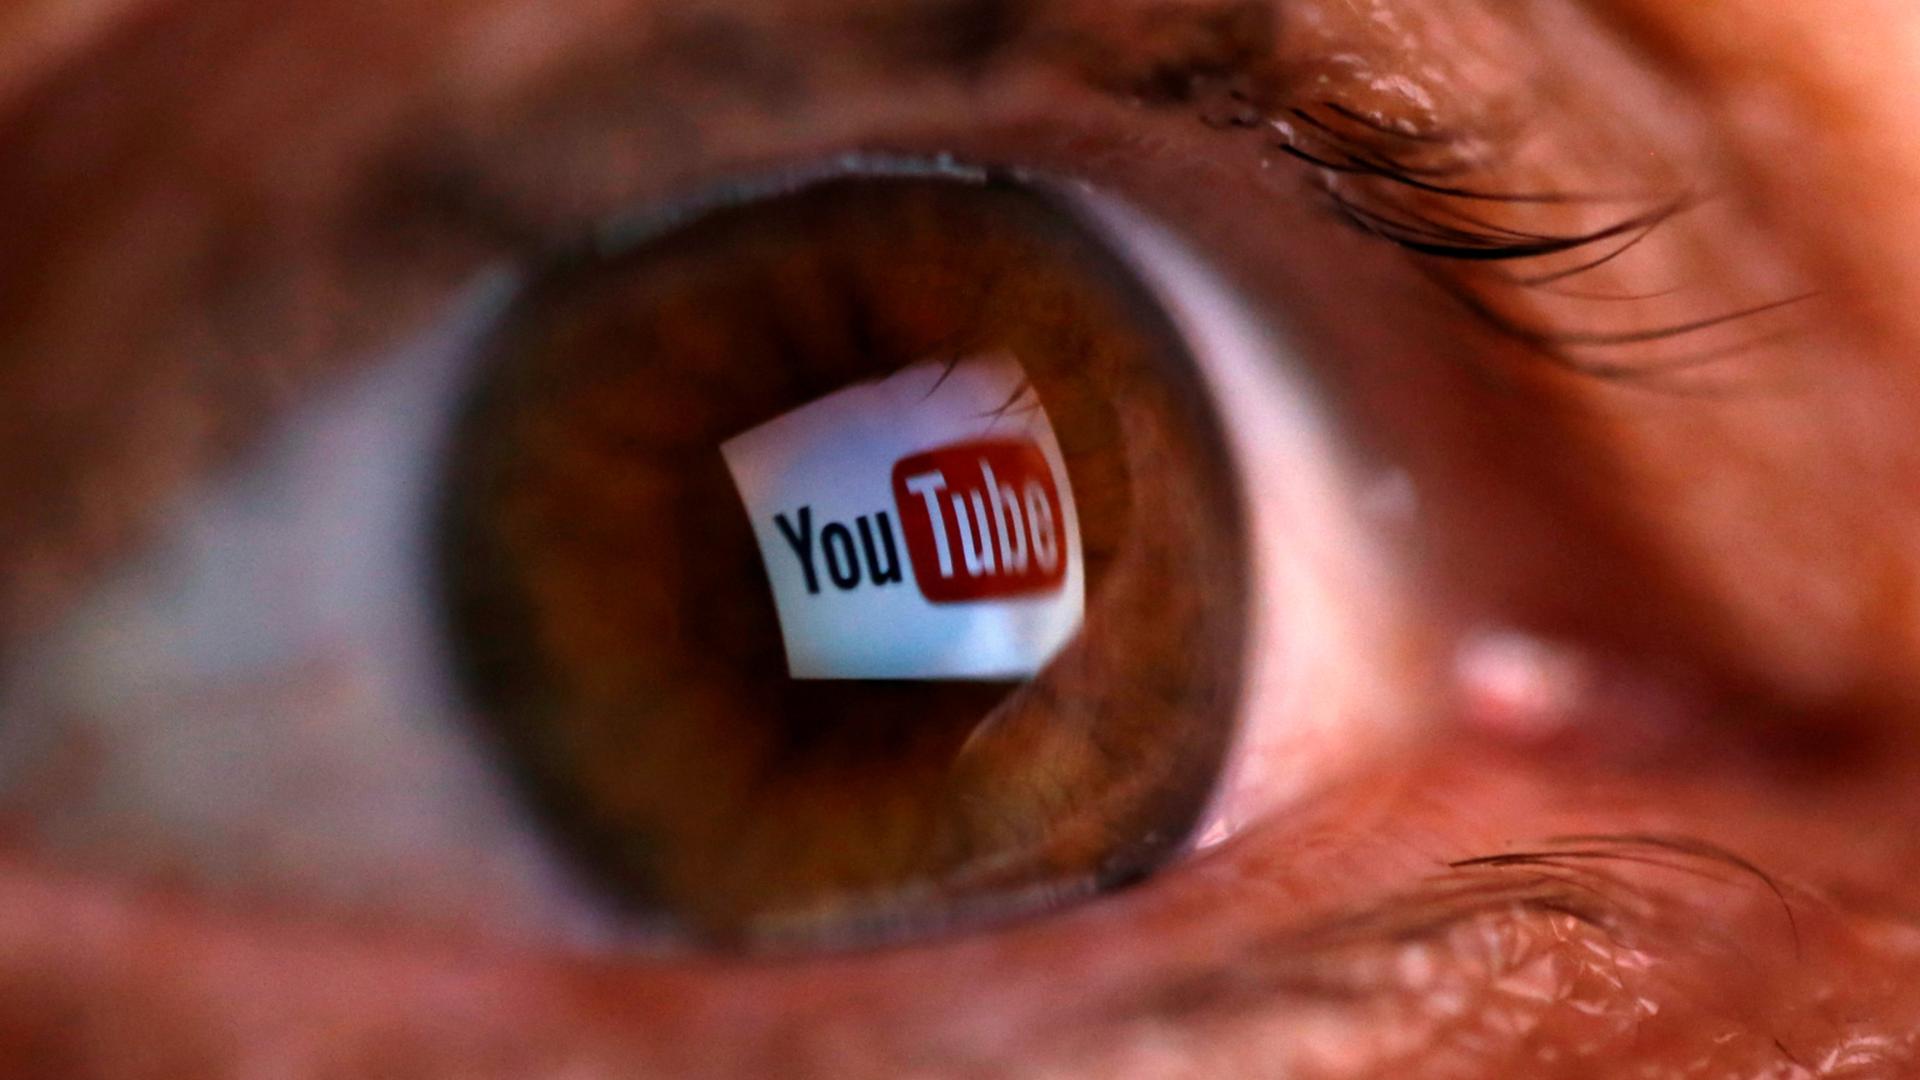 youtube logo reflected in an eyeball